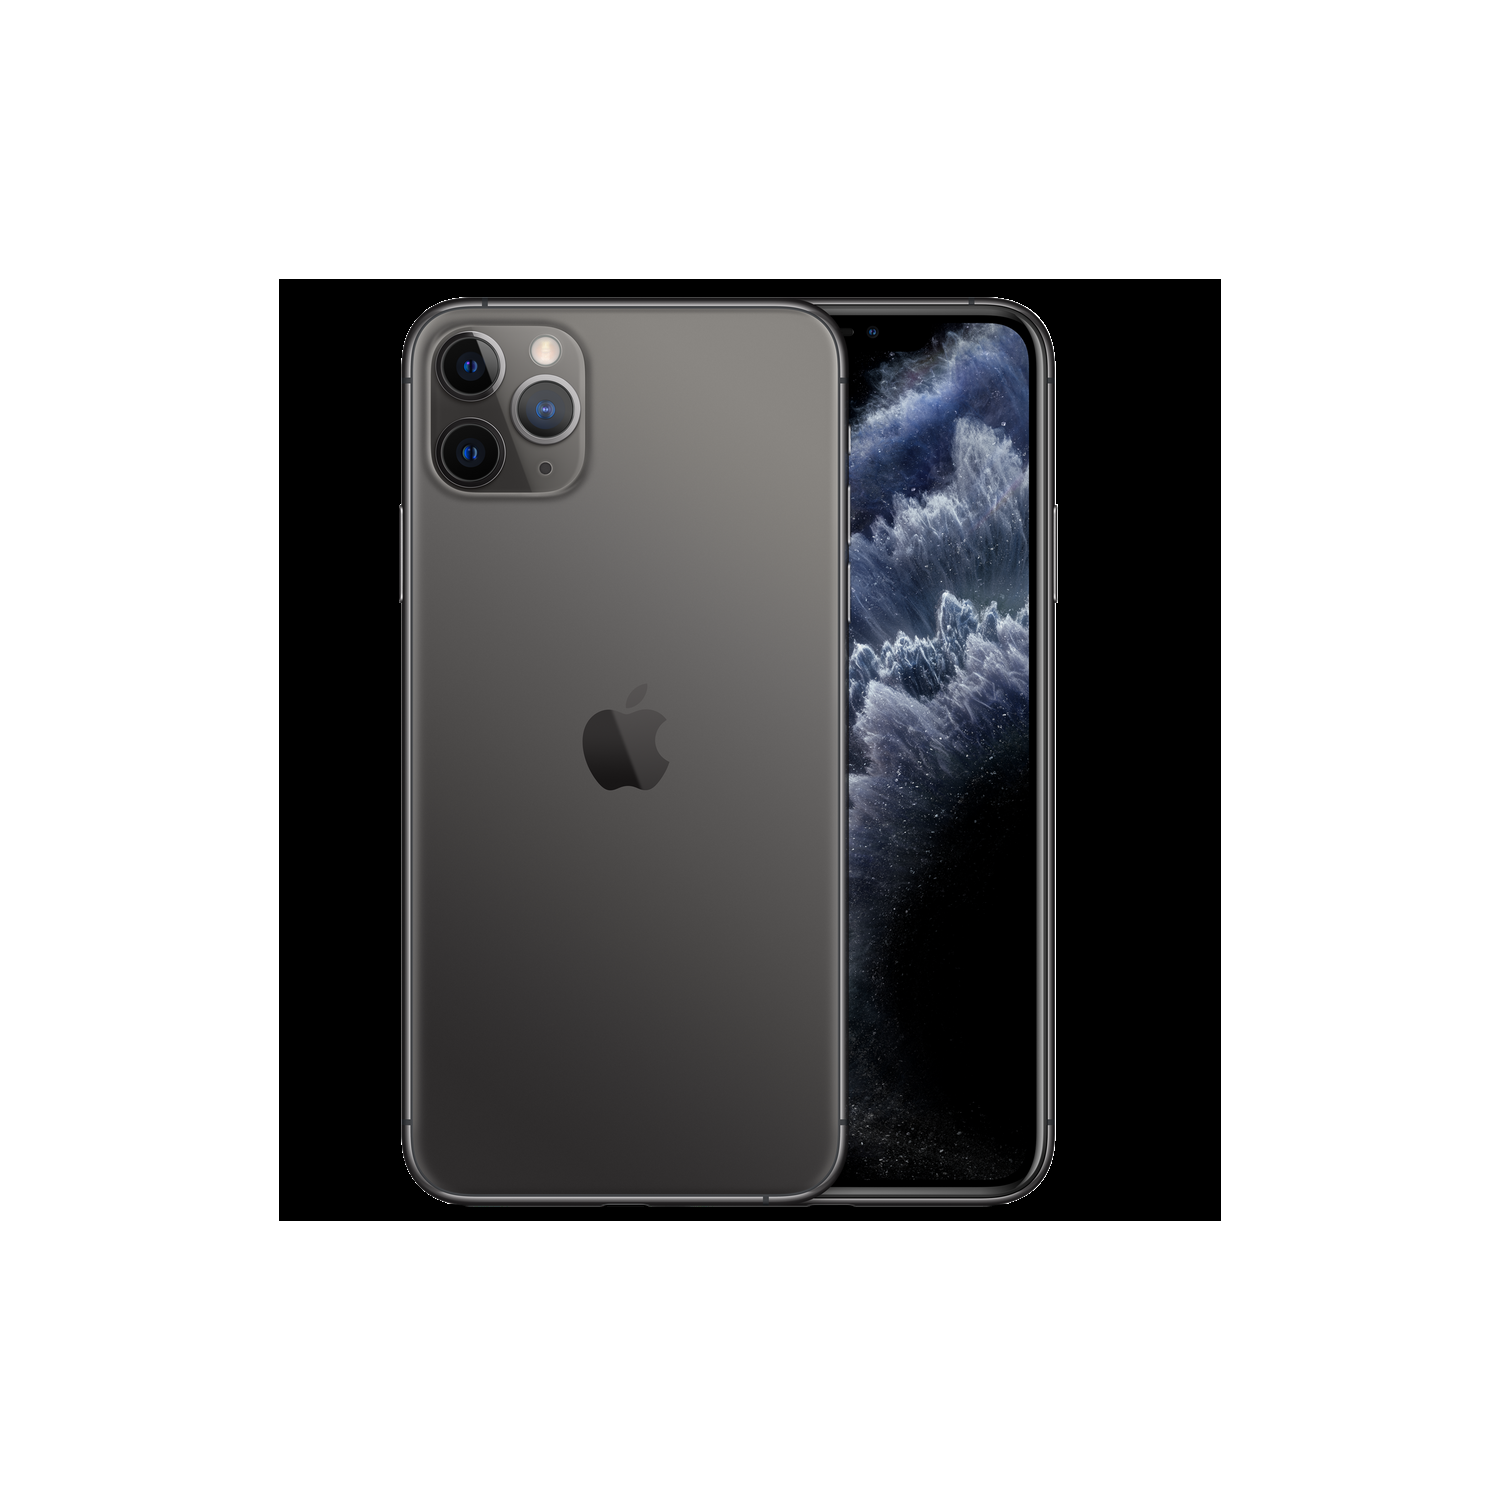 Refurbished (Good) - Apple iPhone 11 Pro Max 64GB Smartphone - Space Gray - Unlocked